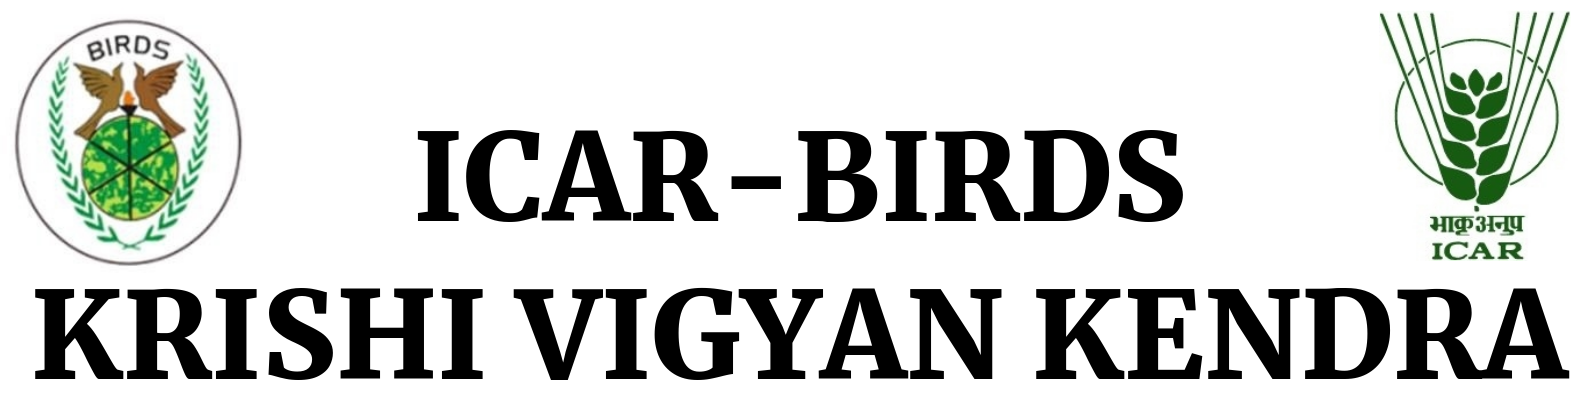 ICAR BIRDS Krishi Vigyan Kendra